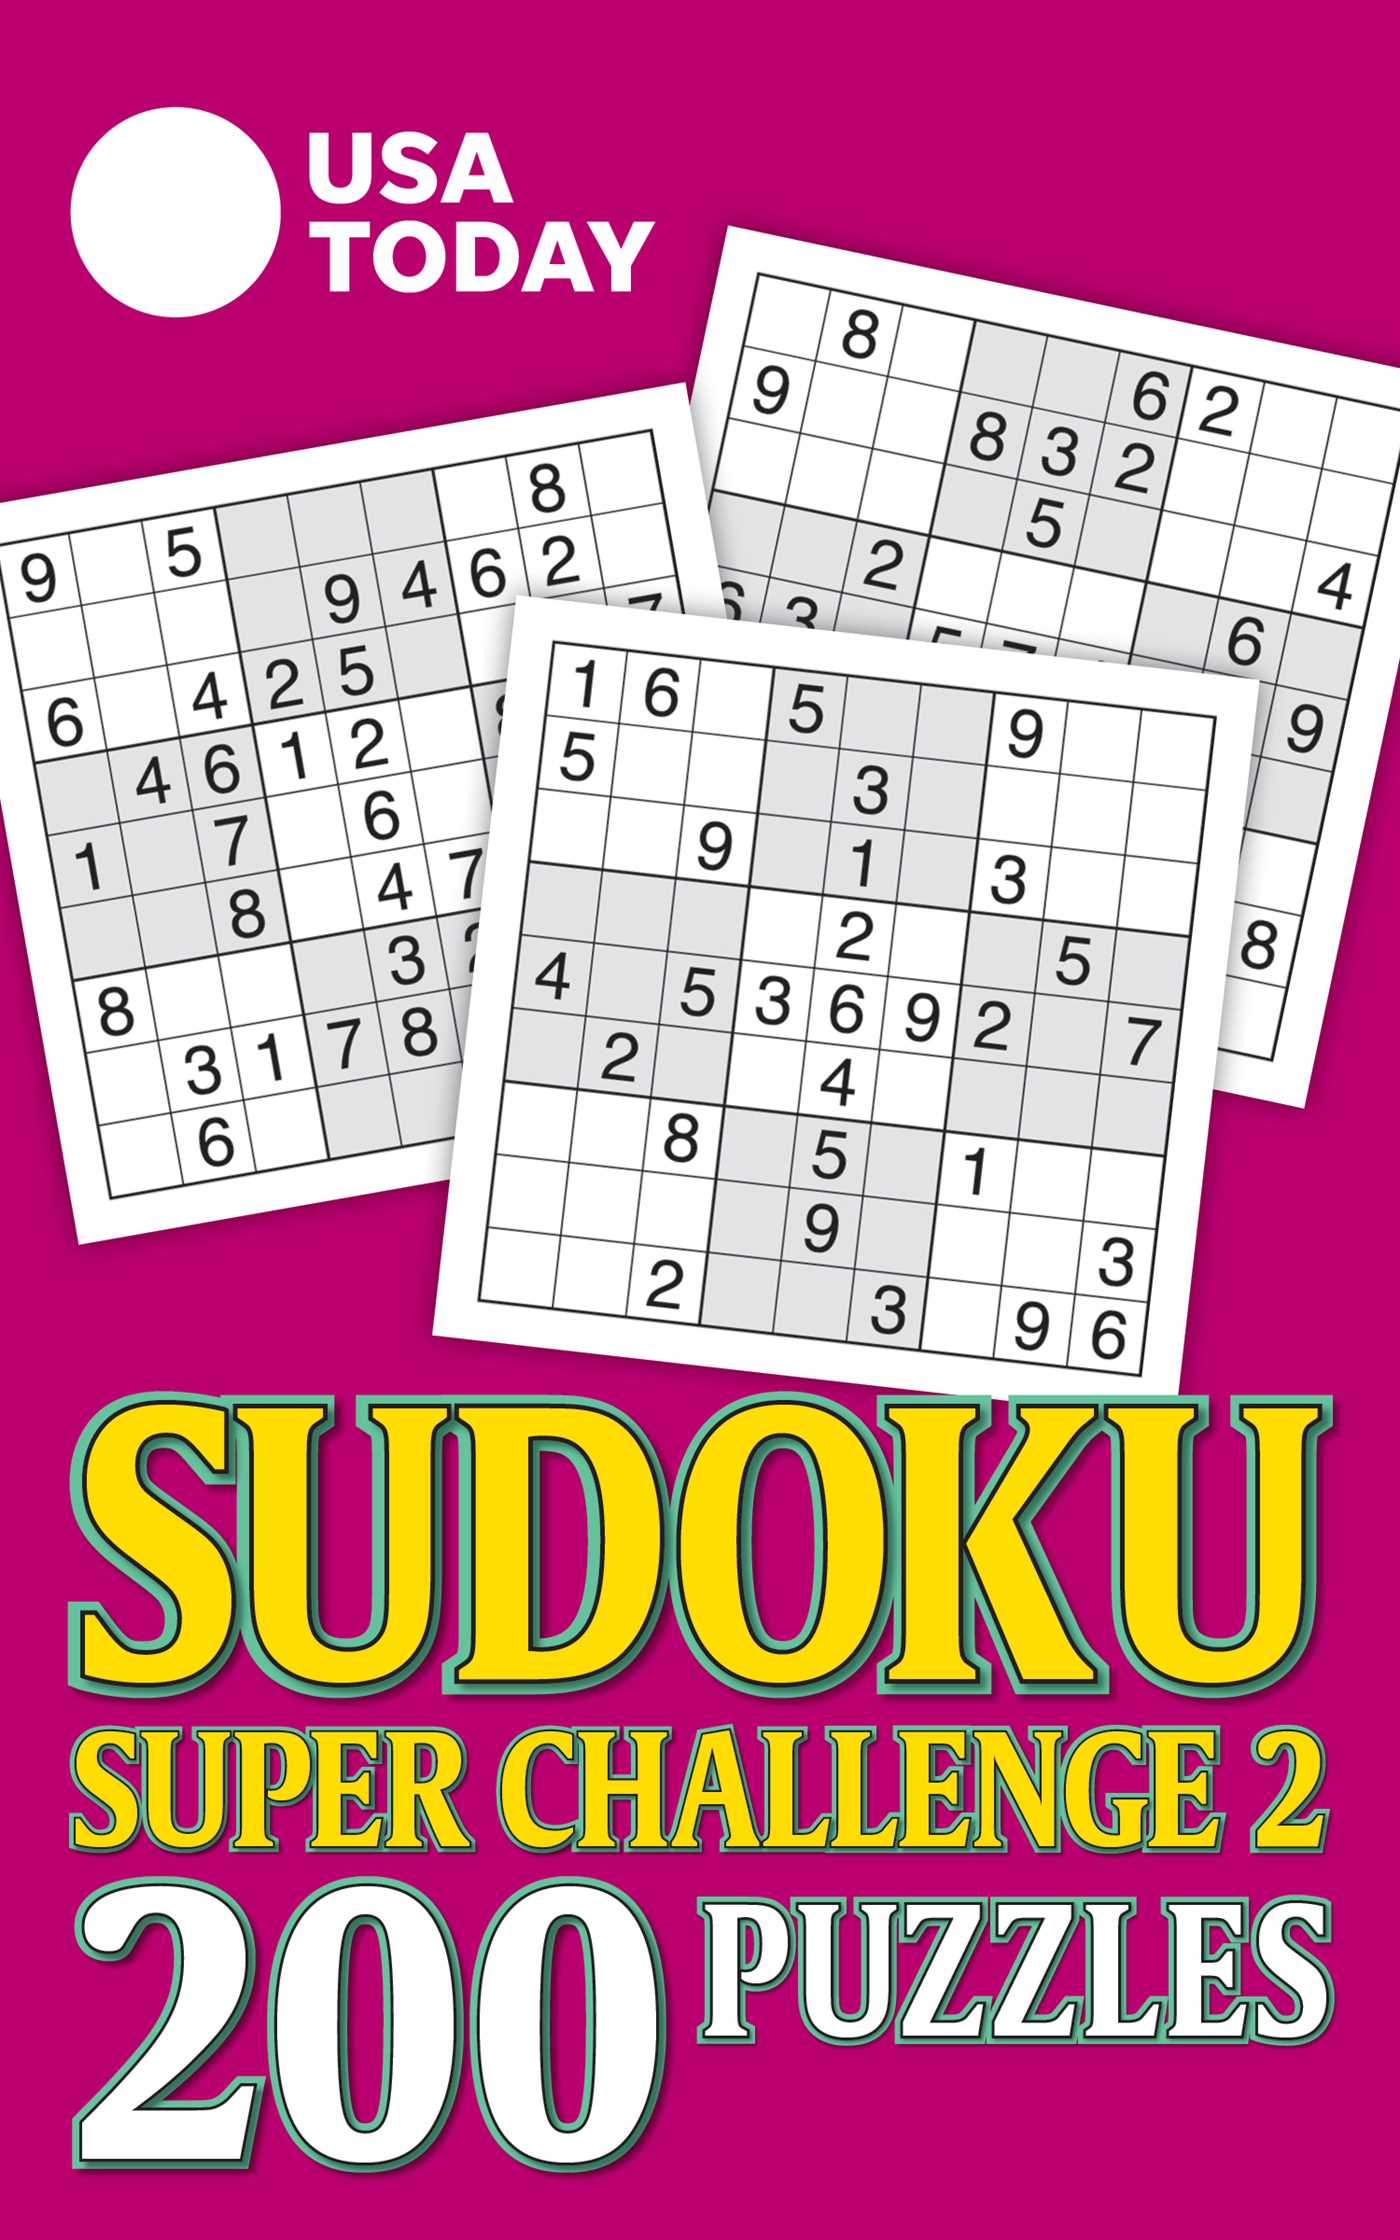 USA TODAY Sudoku Super Challenge 2